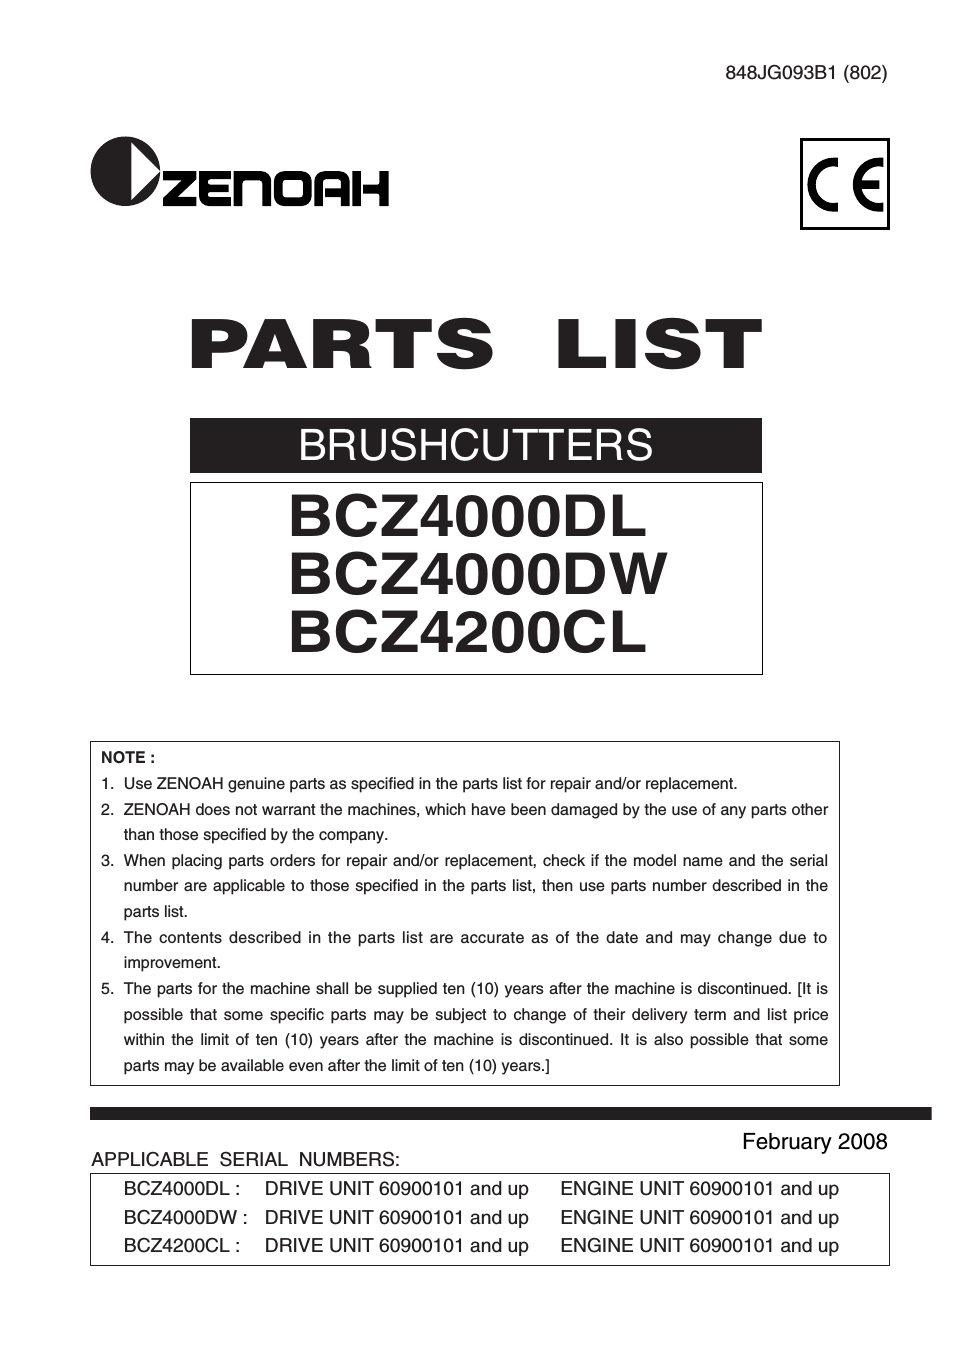 BRUSHCUTTERS BCZ4000DL